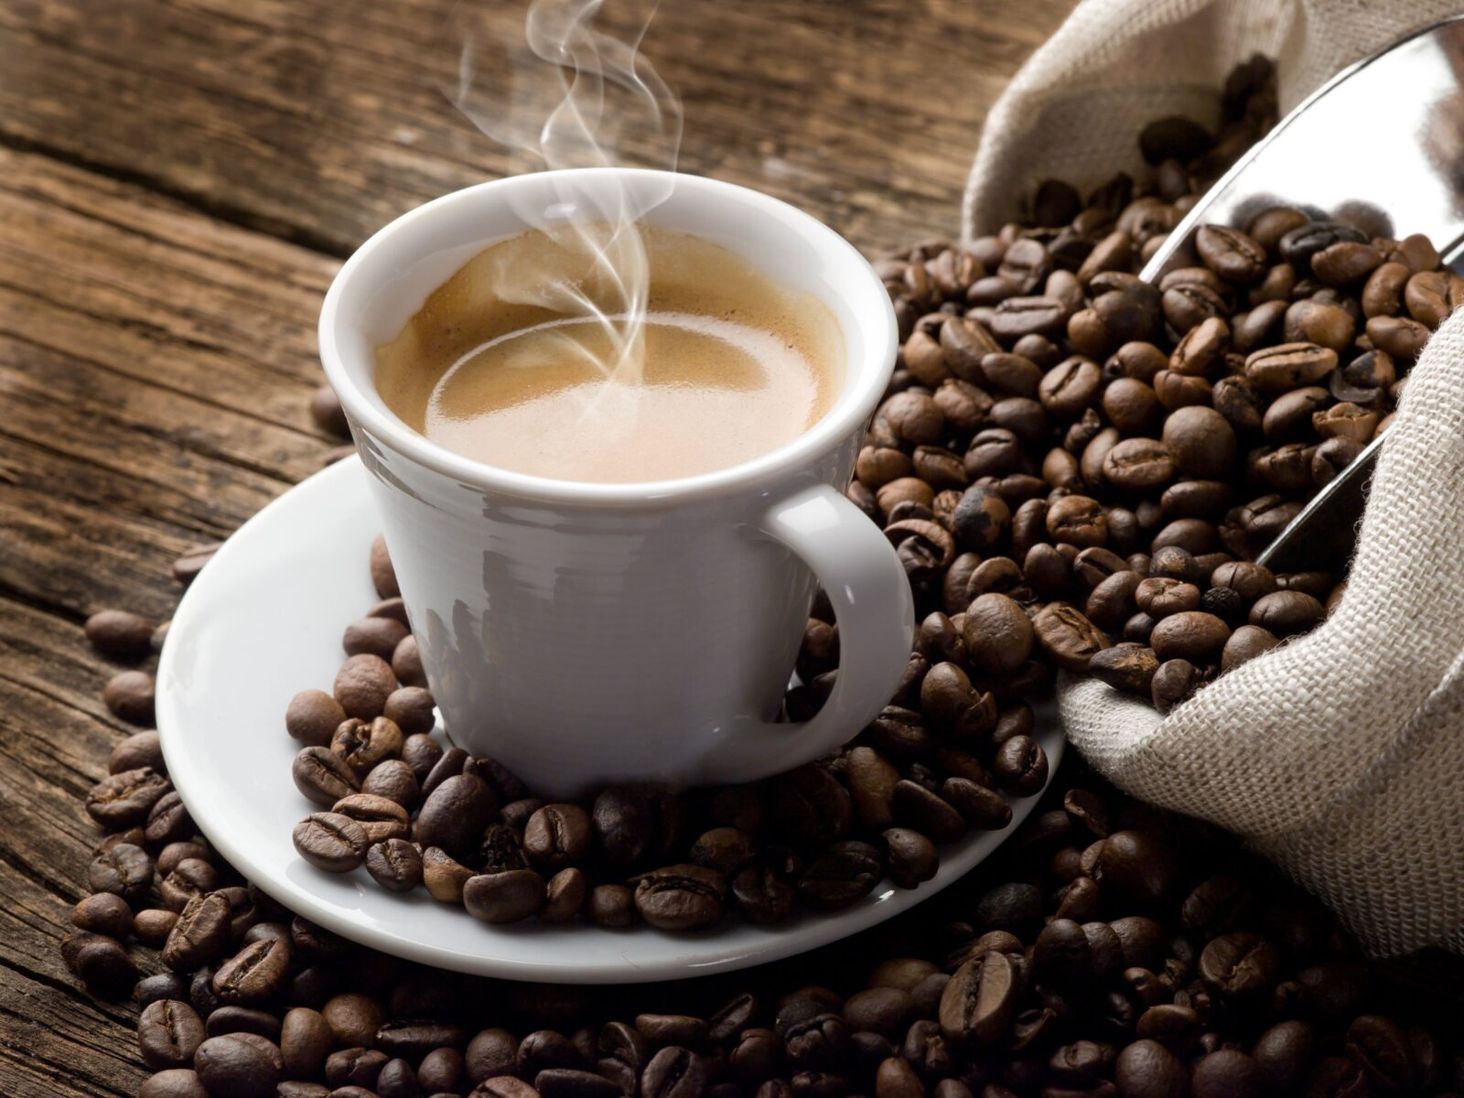 Café en grain Starbucks - Blonde Espresso Roast - 450g